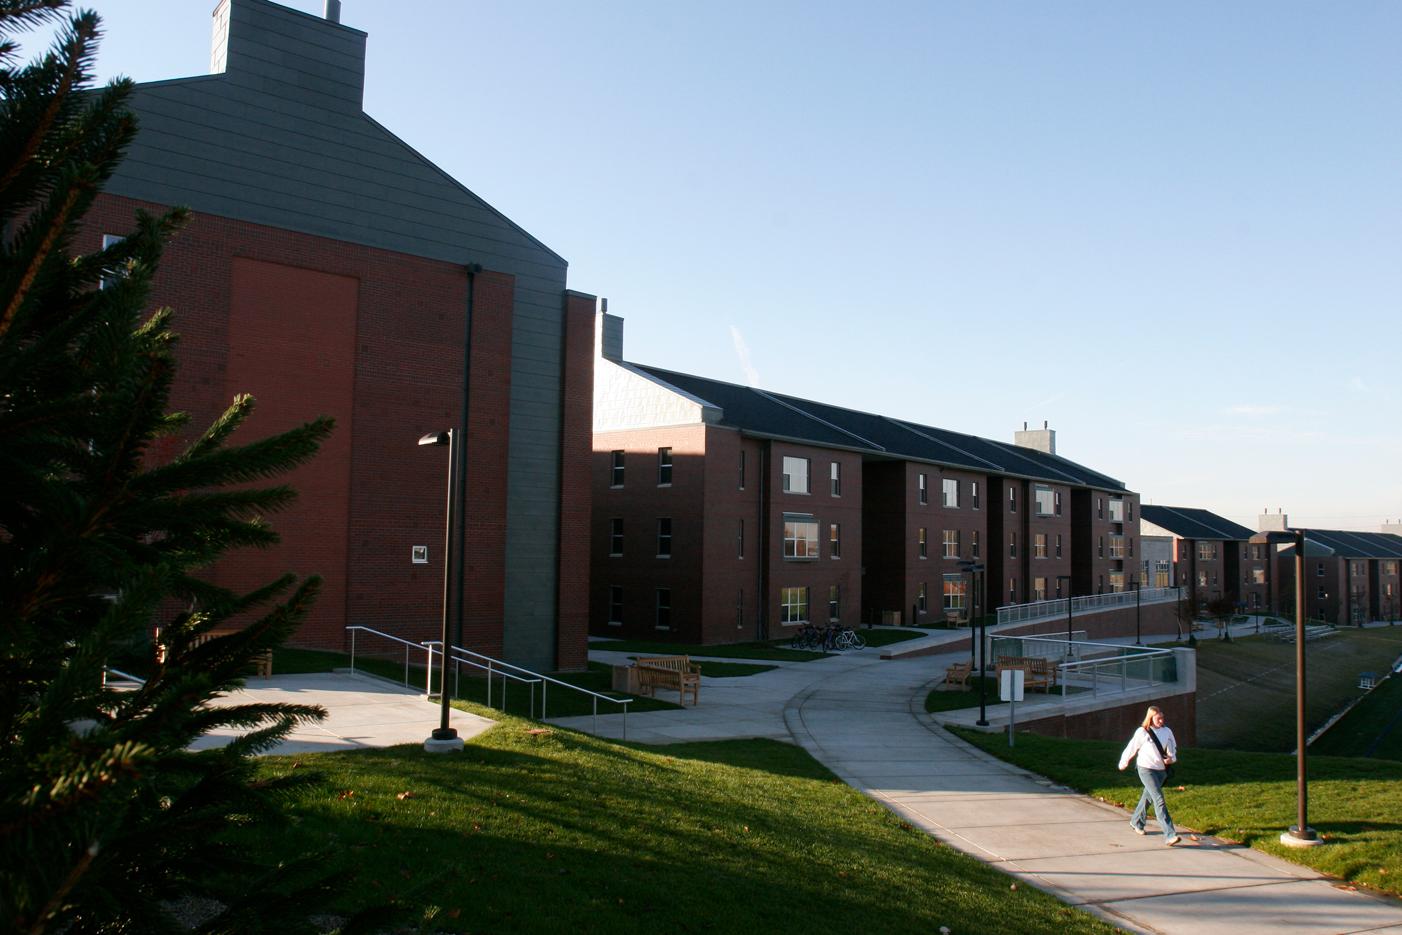 University apartments